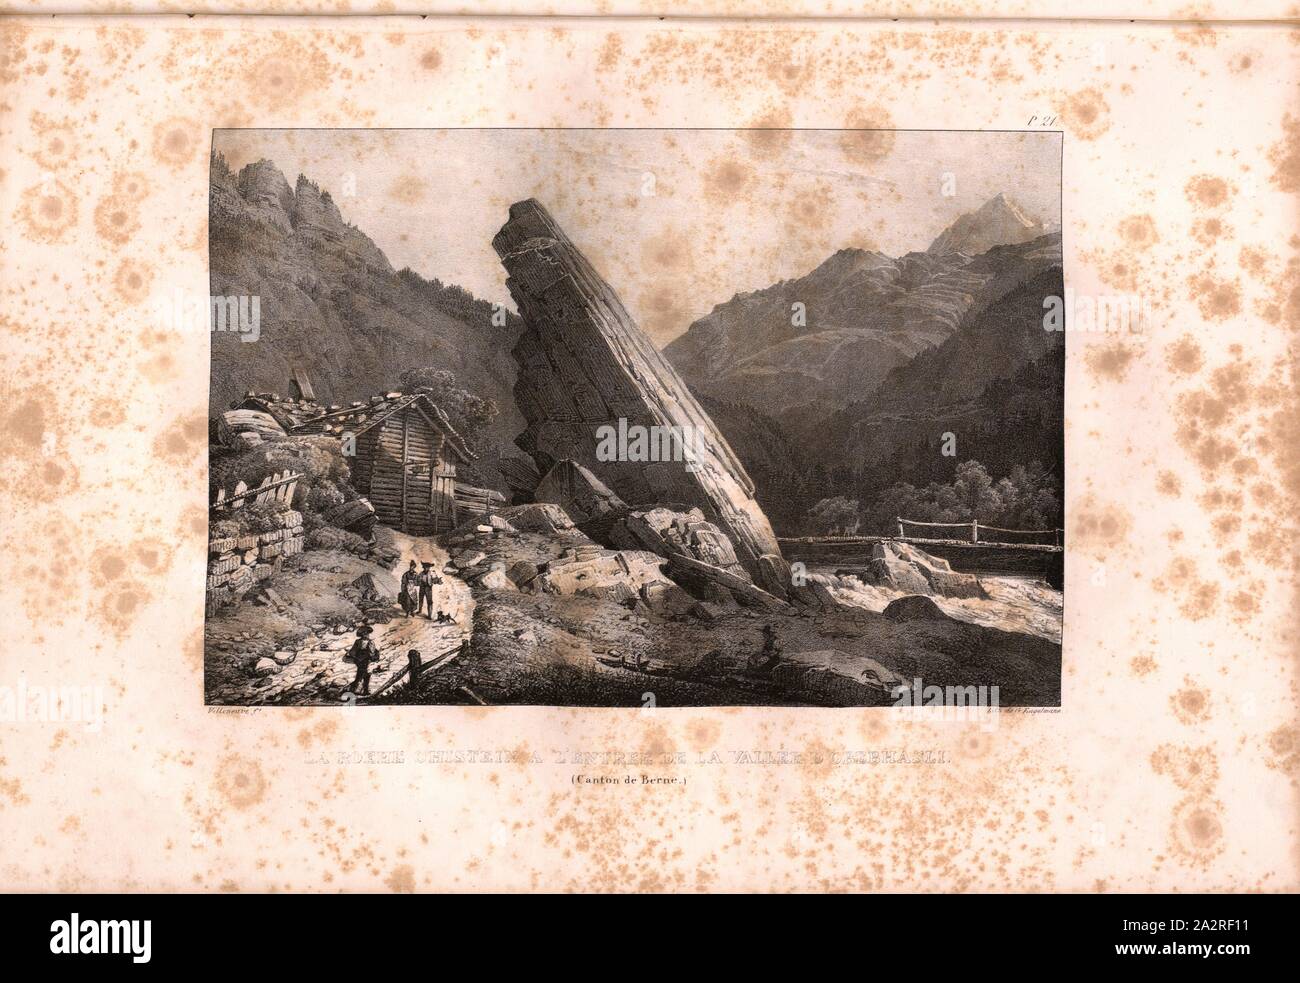 The Roehe Ohistein at the entrance of the Obebhasli valley sic!, At the entrance to the Haslital, Signed: Villeneuve, G. Engelmann, lithograph, pl. 21 (vol. 1, part 1), Villeneuve, M. (ft.); Engelmann, Godefroy (lith.), 1823, Hilaire Léon Sazerac, Godefroy Engelmann: Lettres sur la Suisse (...). Paris: [s.n.], 1823-1832 Stock Photo